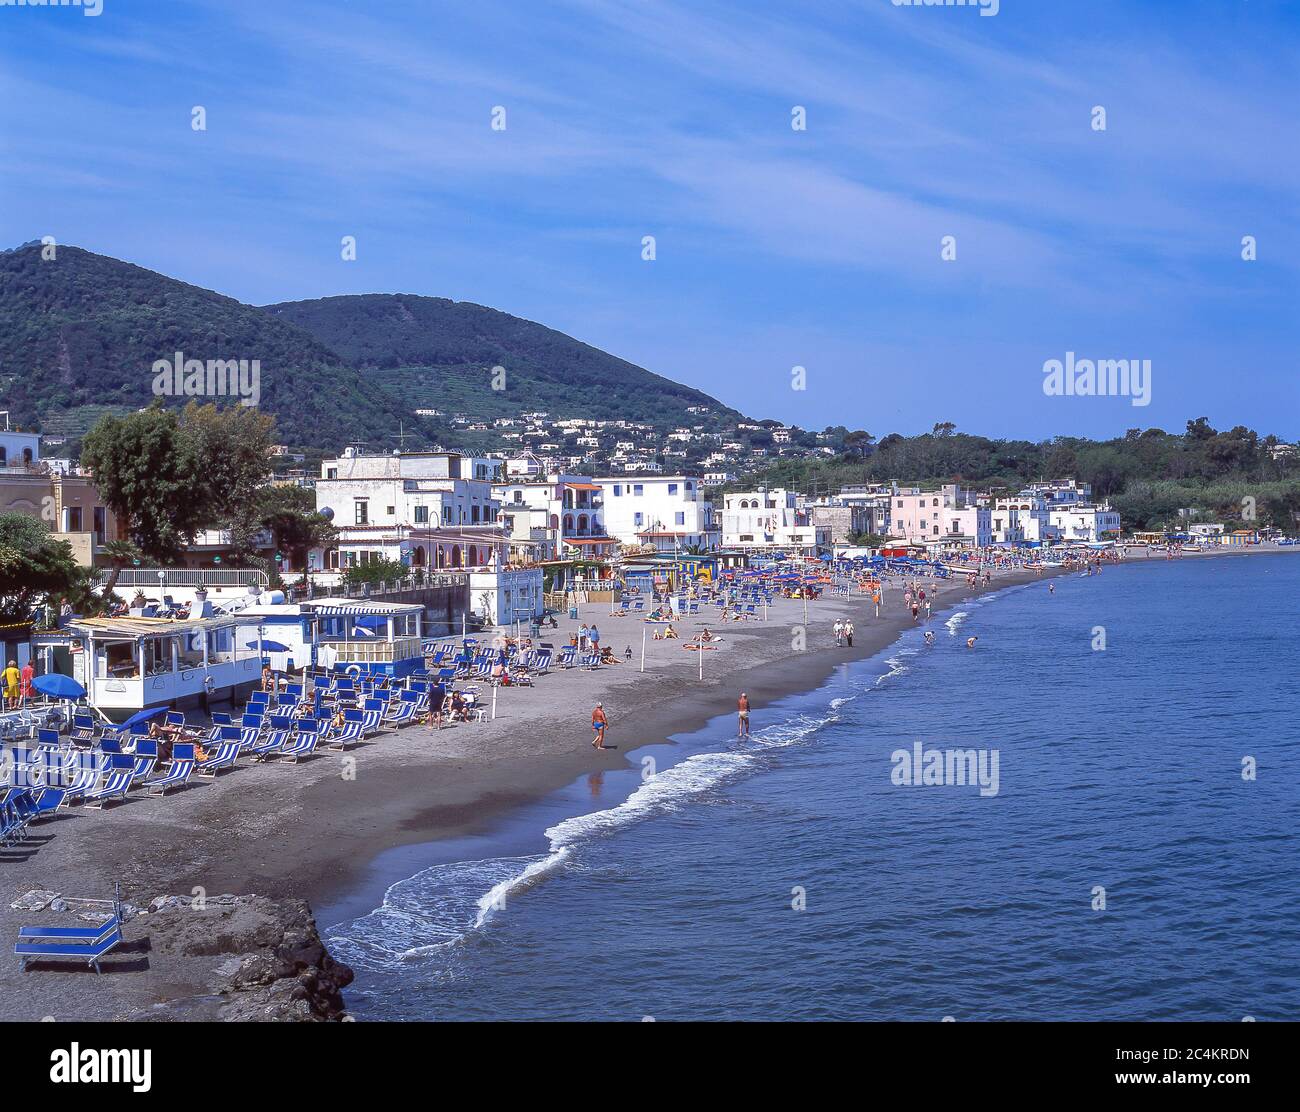 Beach and resort view, Ischia Town, Ischia, Campagnia Region, Italy Stock Photo